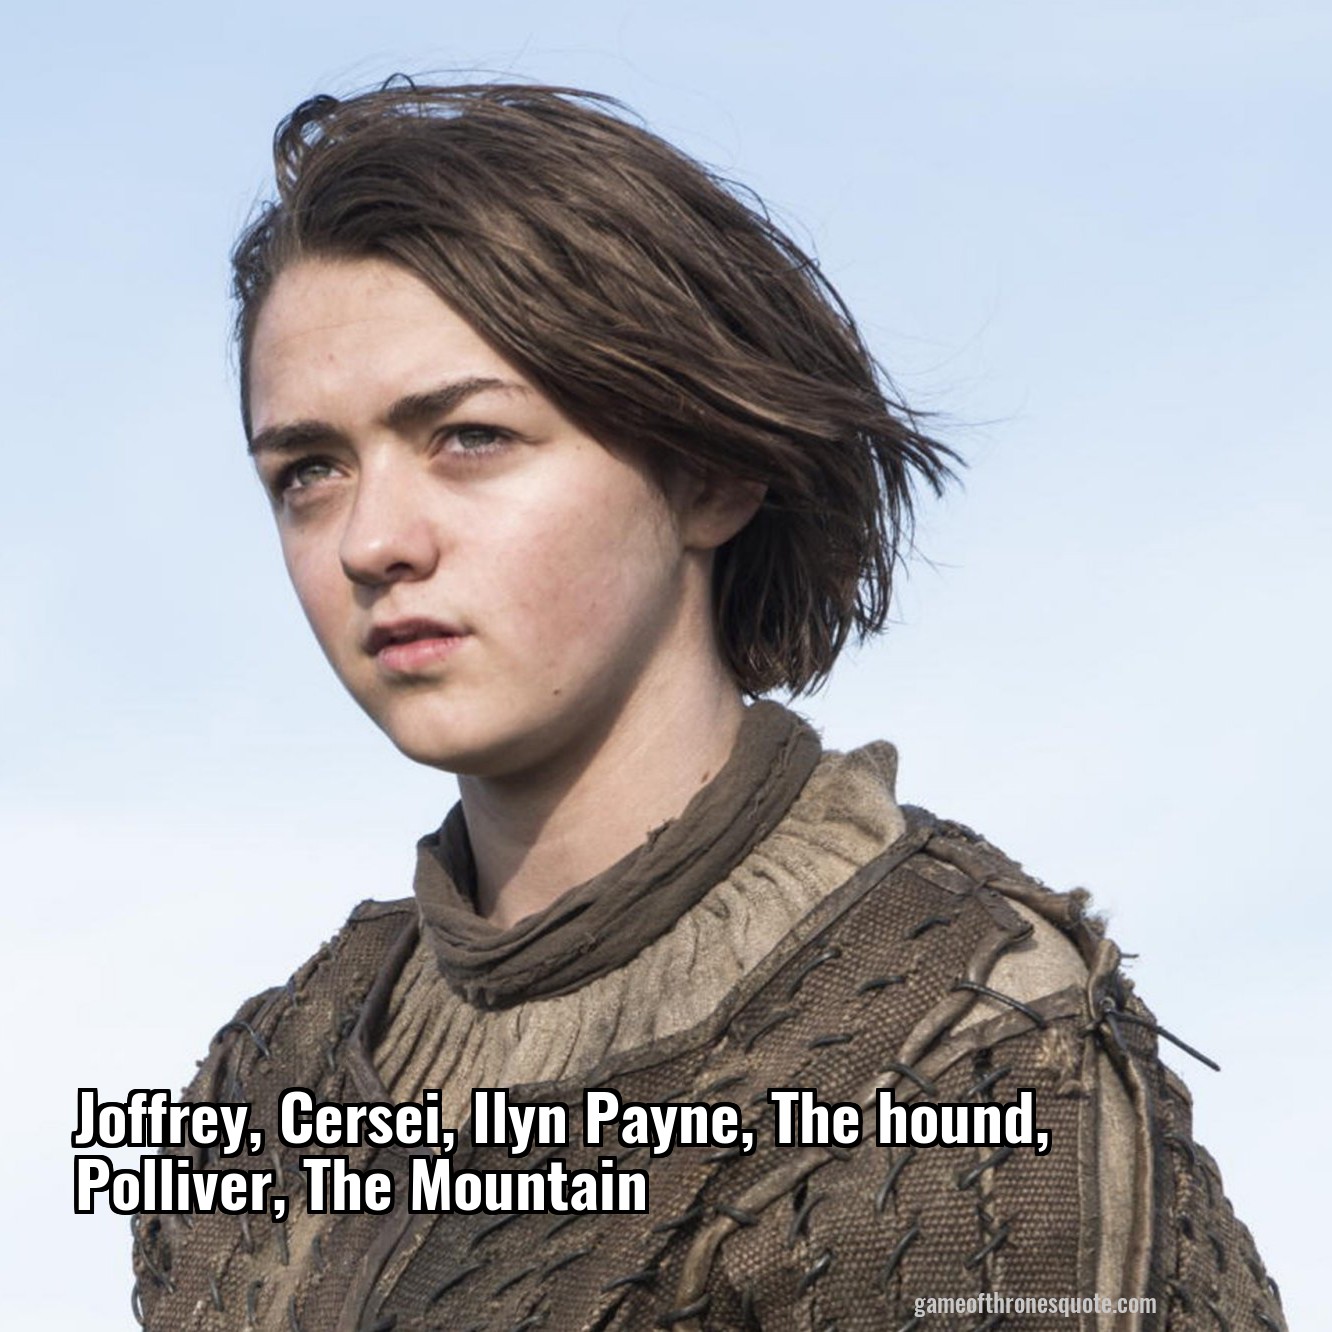 Joffrey, Cersei, Ilyn Payne, The hound, Polliver, The Mountain